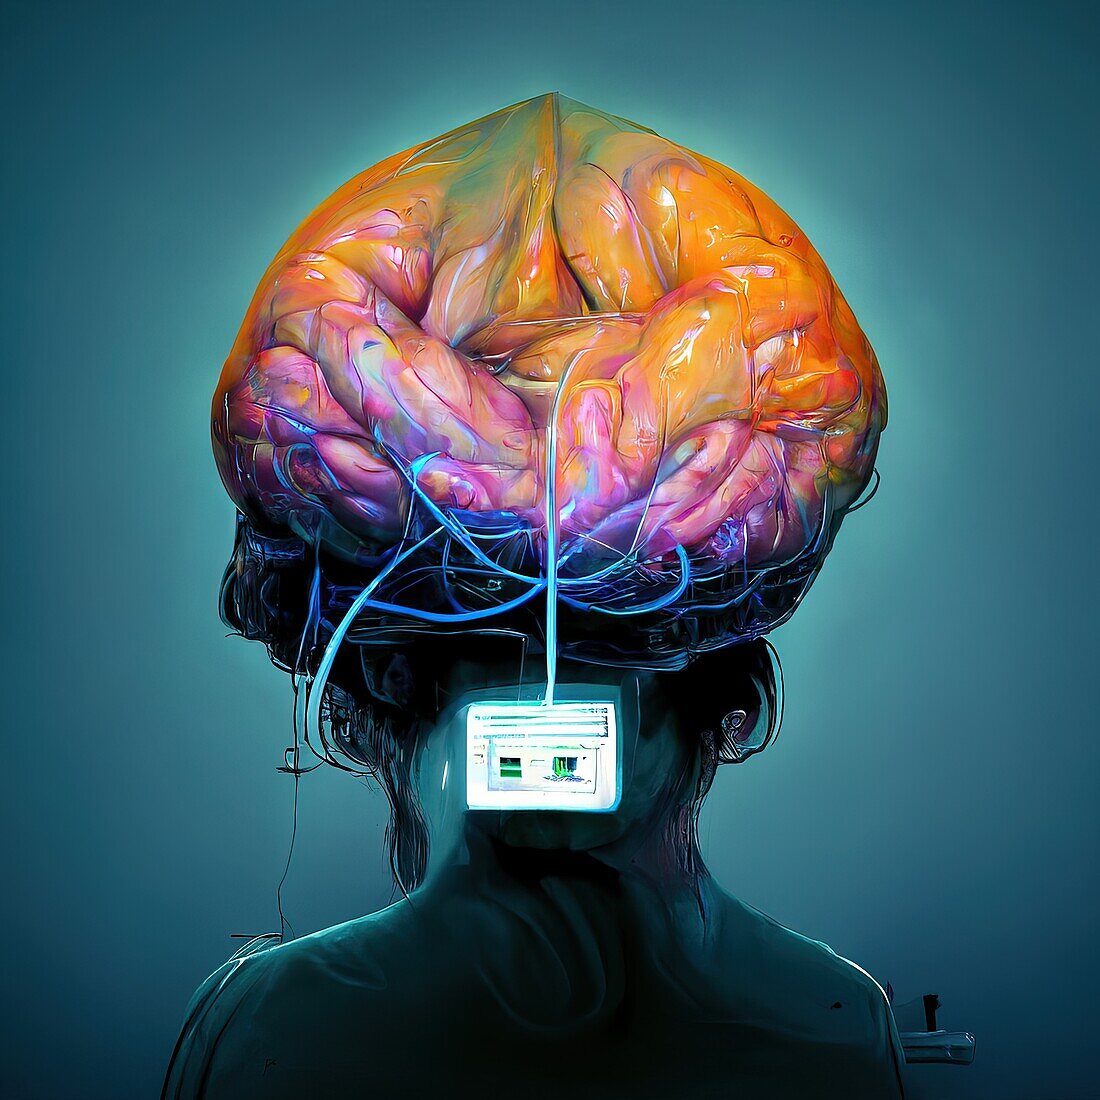 Brain computer interface, conceptual illustration